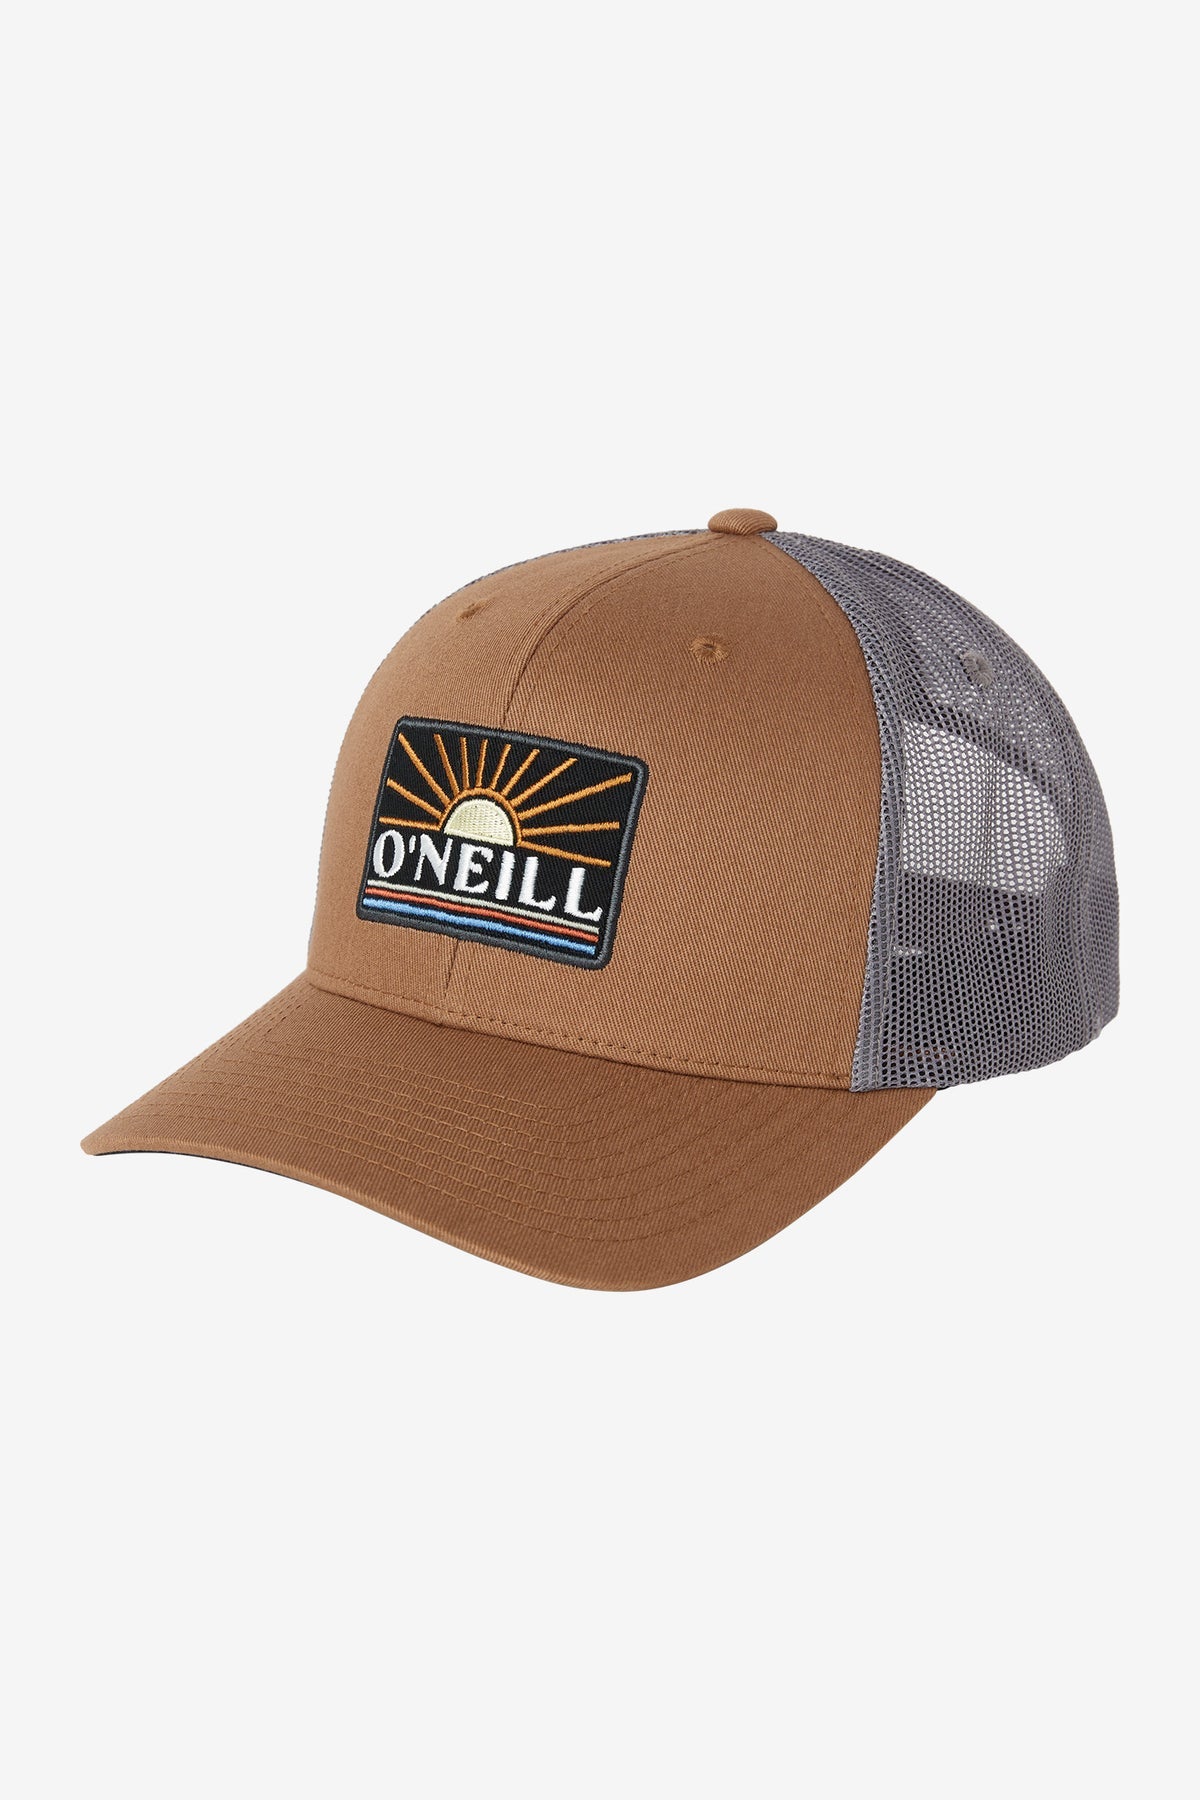 O'Neill Headquarters Trucker Hat